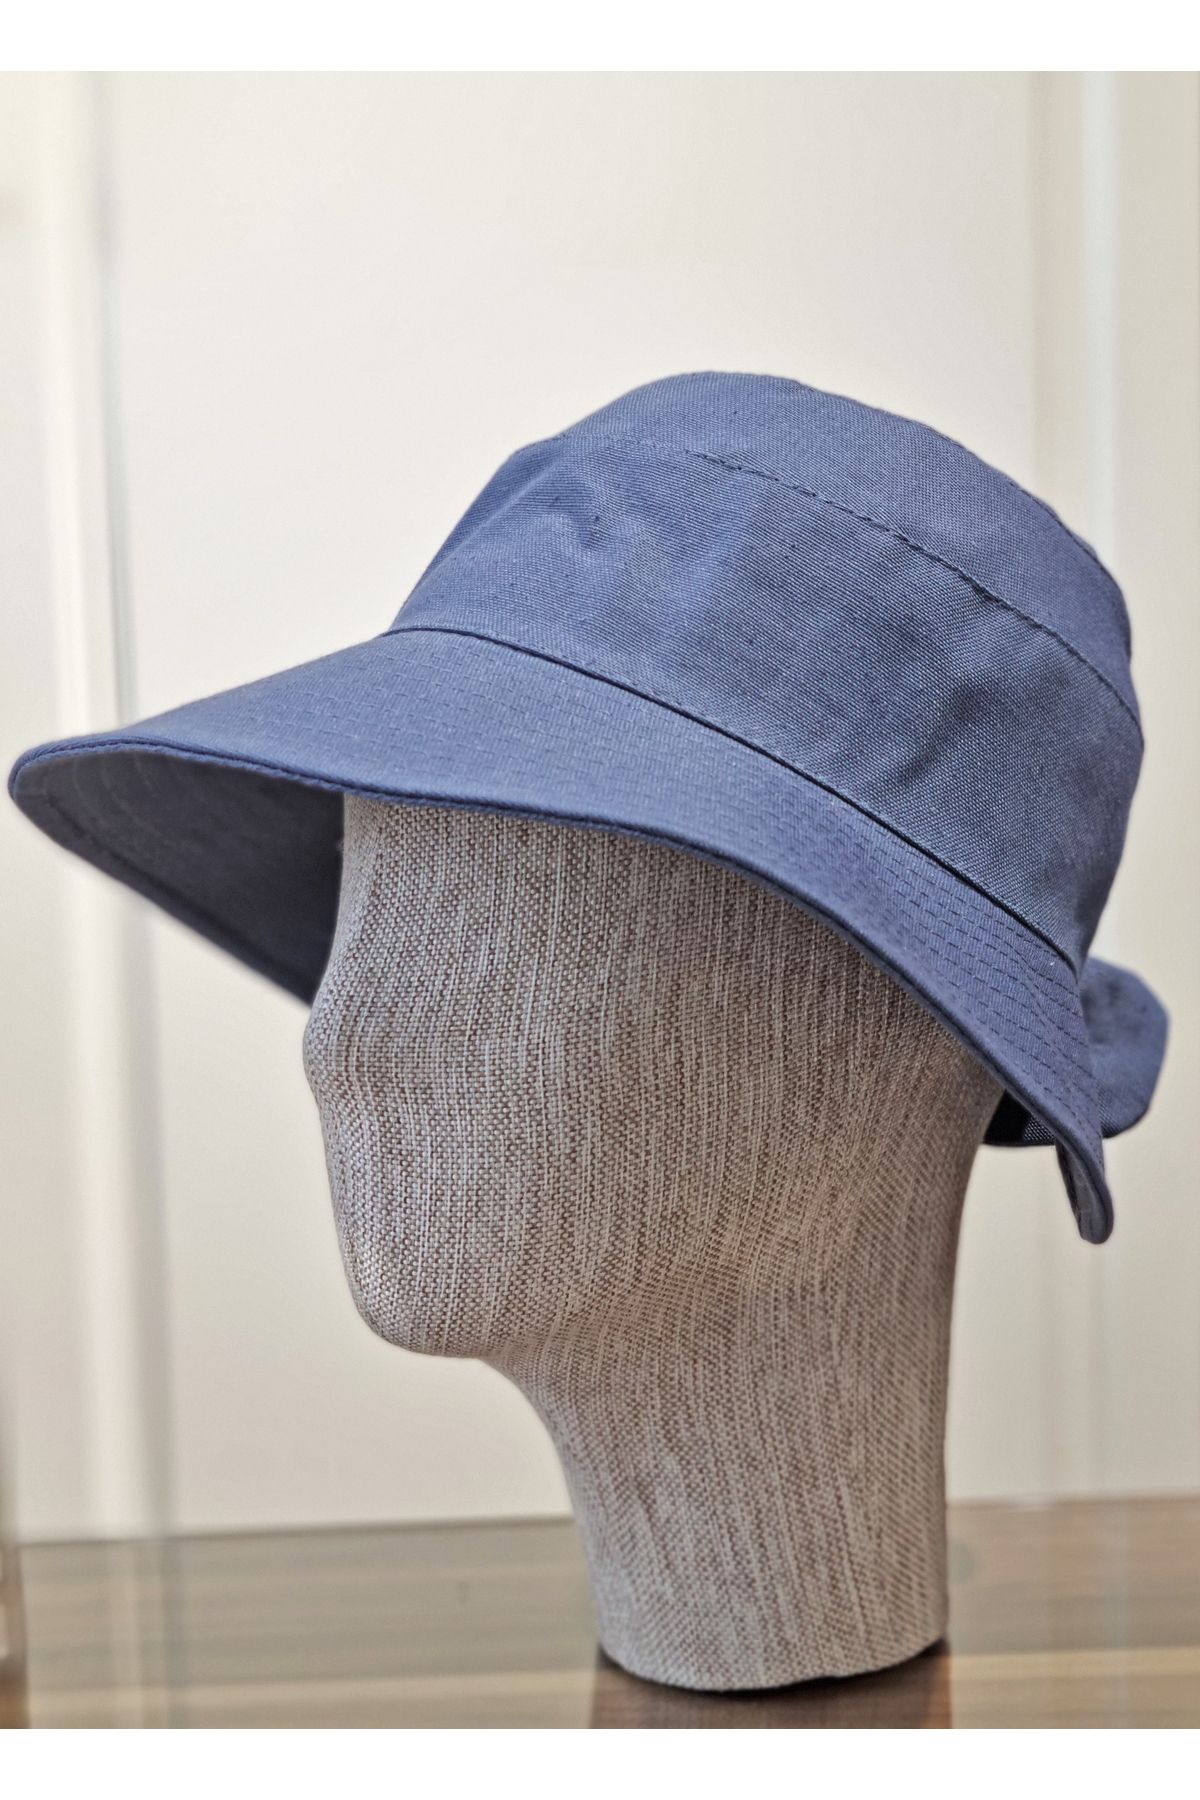 Özgöksu Şapka Fiyonk Detaylı Arkası Ayarlı Kadın Vizör Şapka Fiyonklu Geniş Kadın Şapka